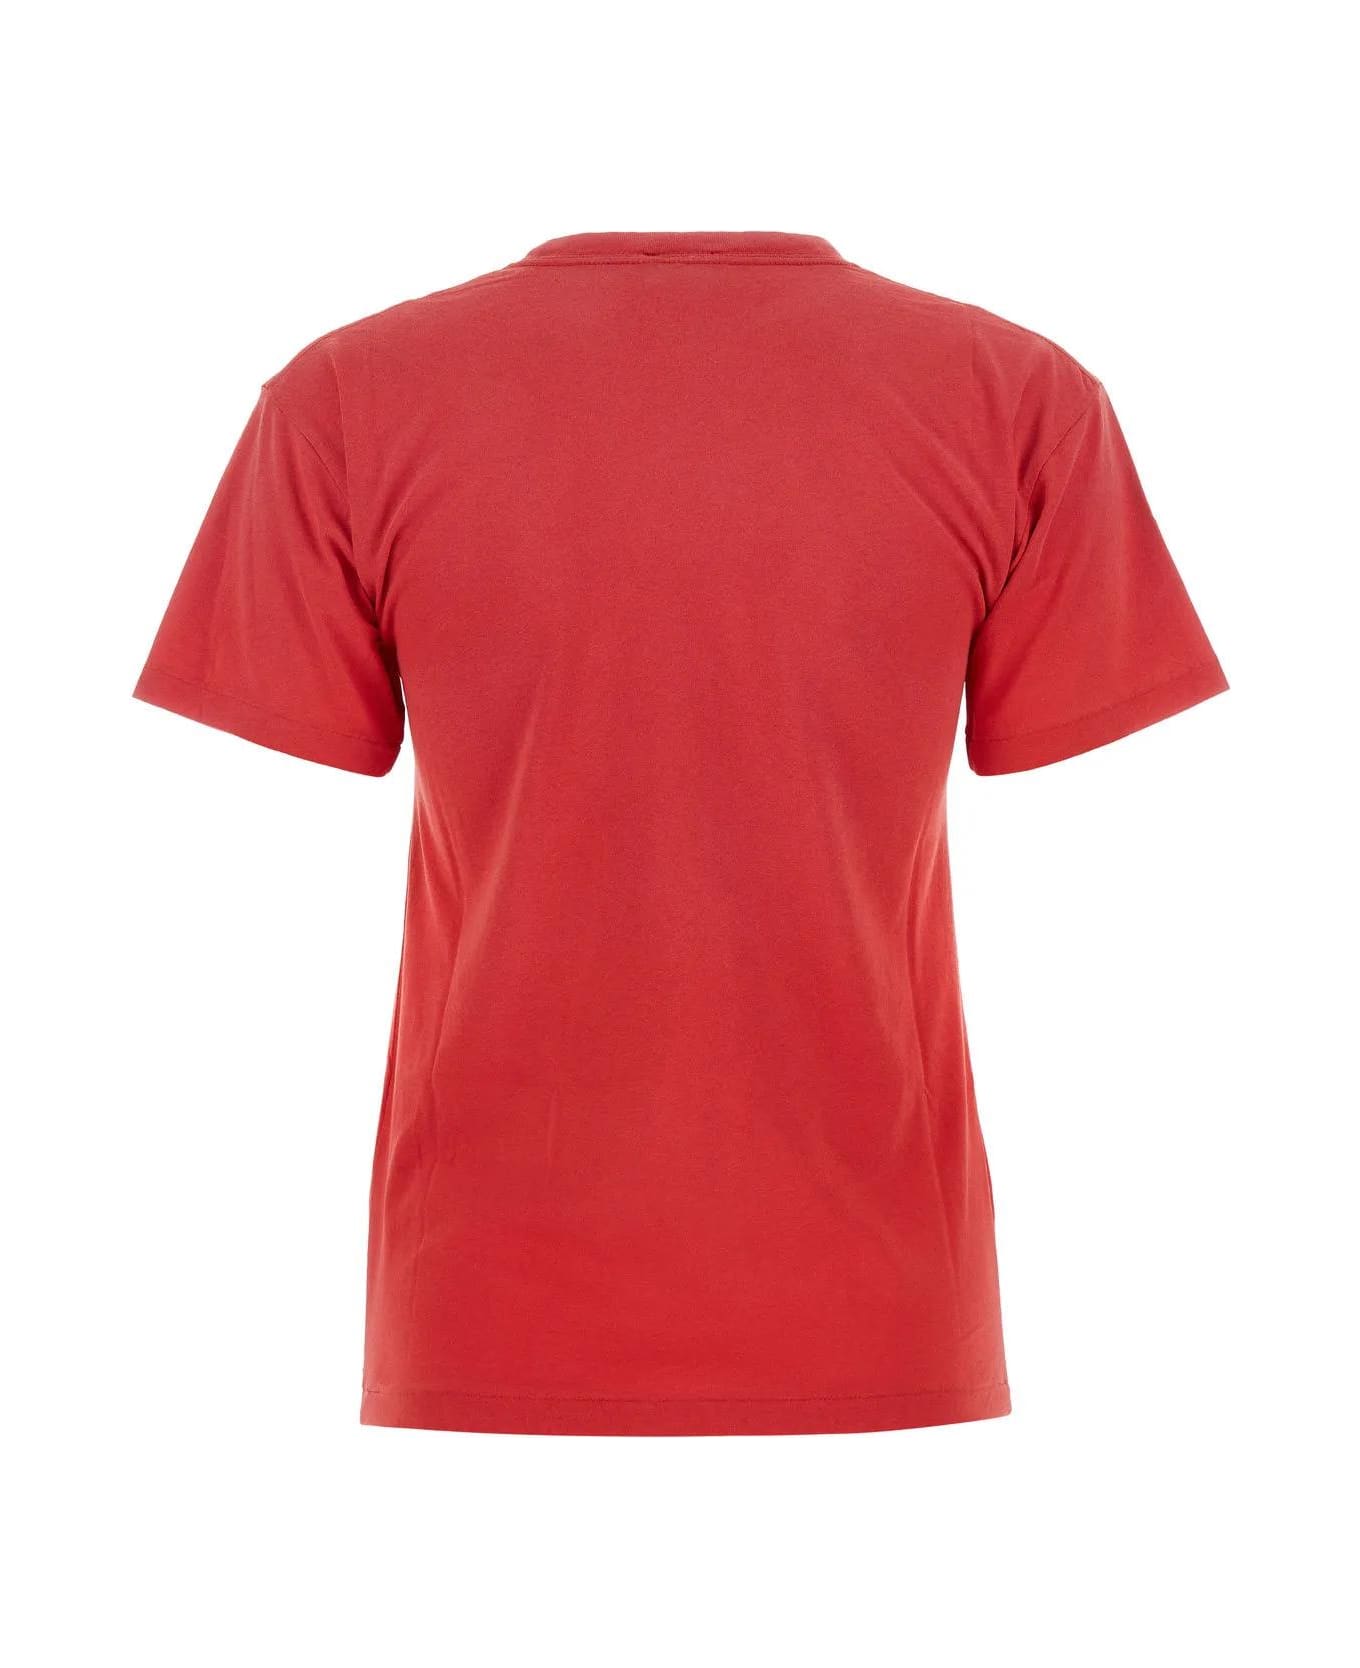 Ralph Lauren Red Cotton T-shirt - SUNRISE RED